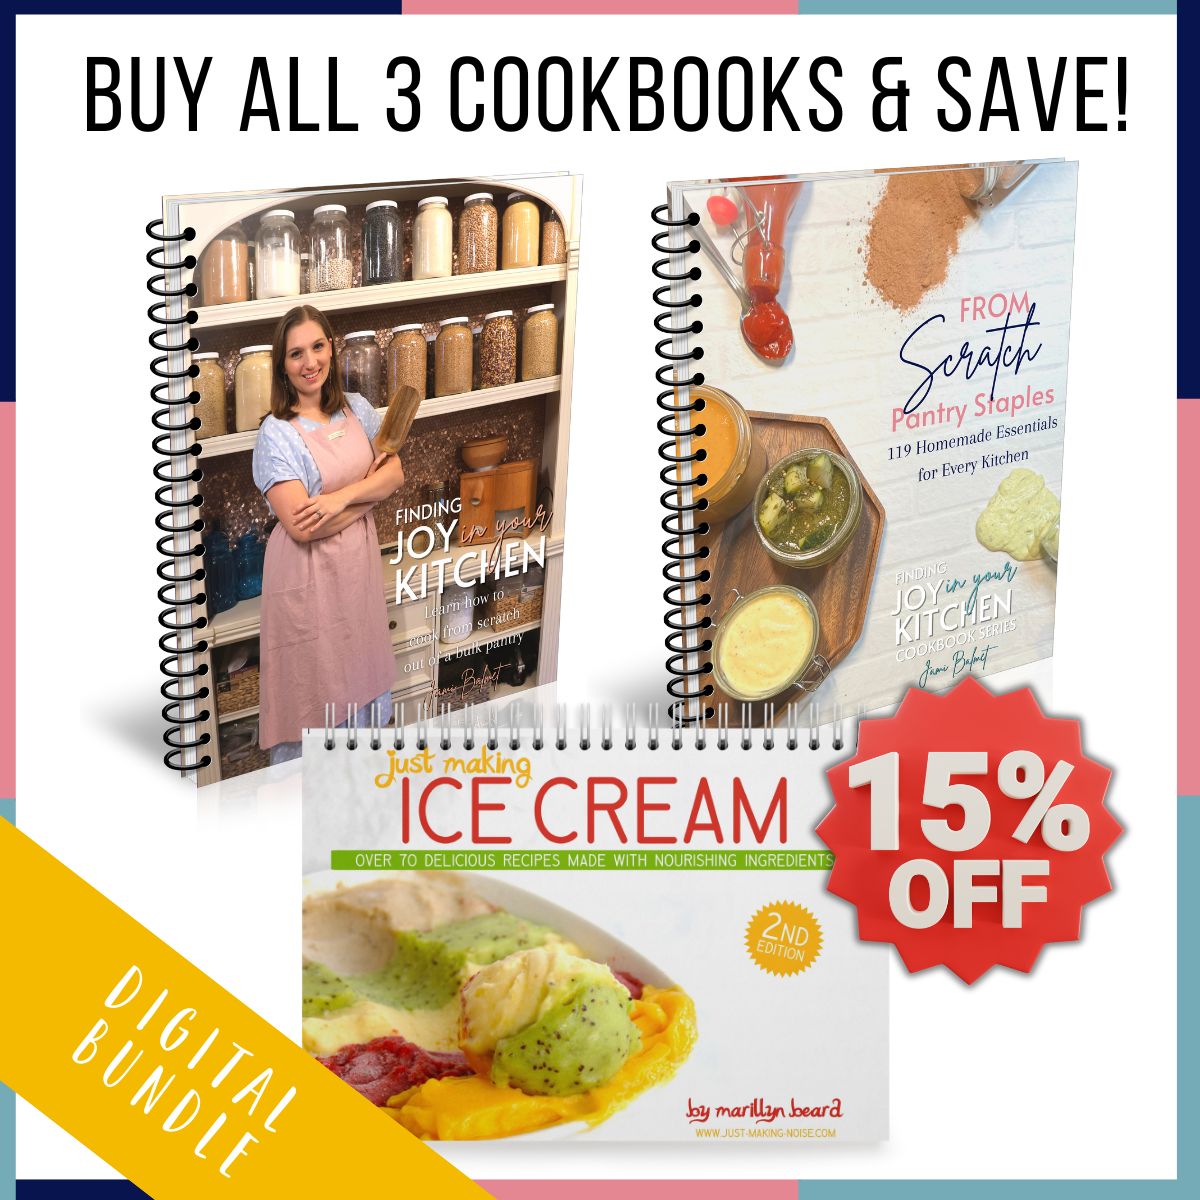 Buy all 3 cookbooks & save 15%! DIGITAL